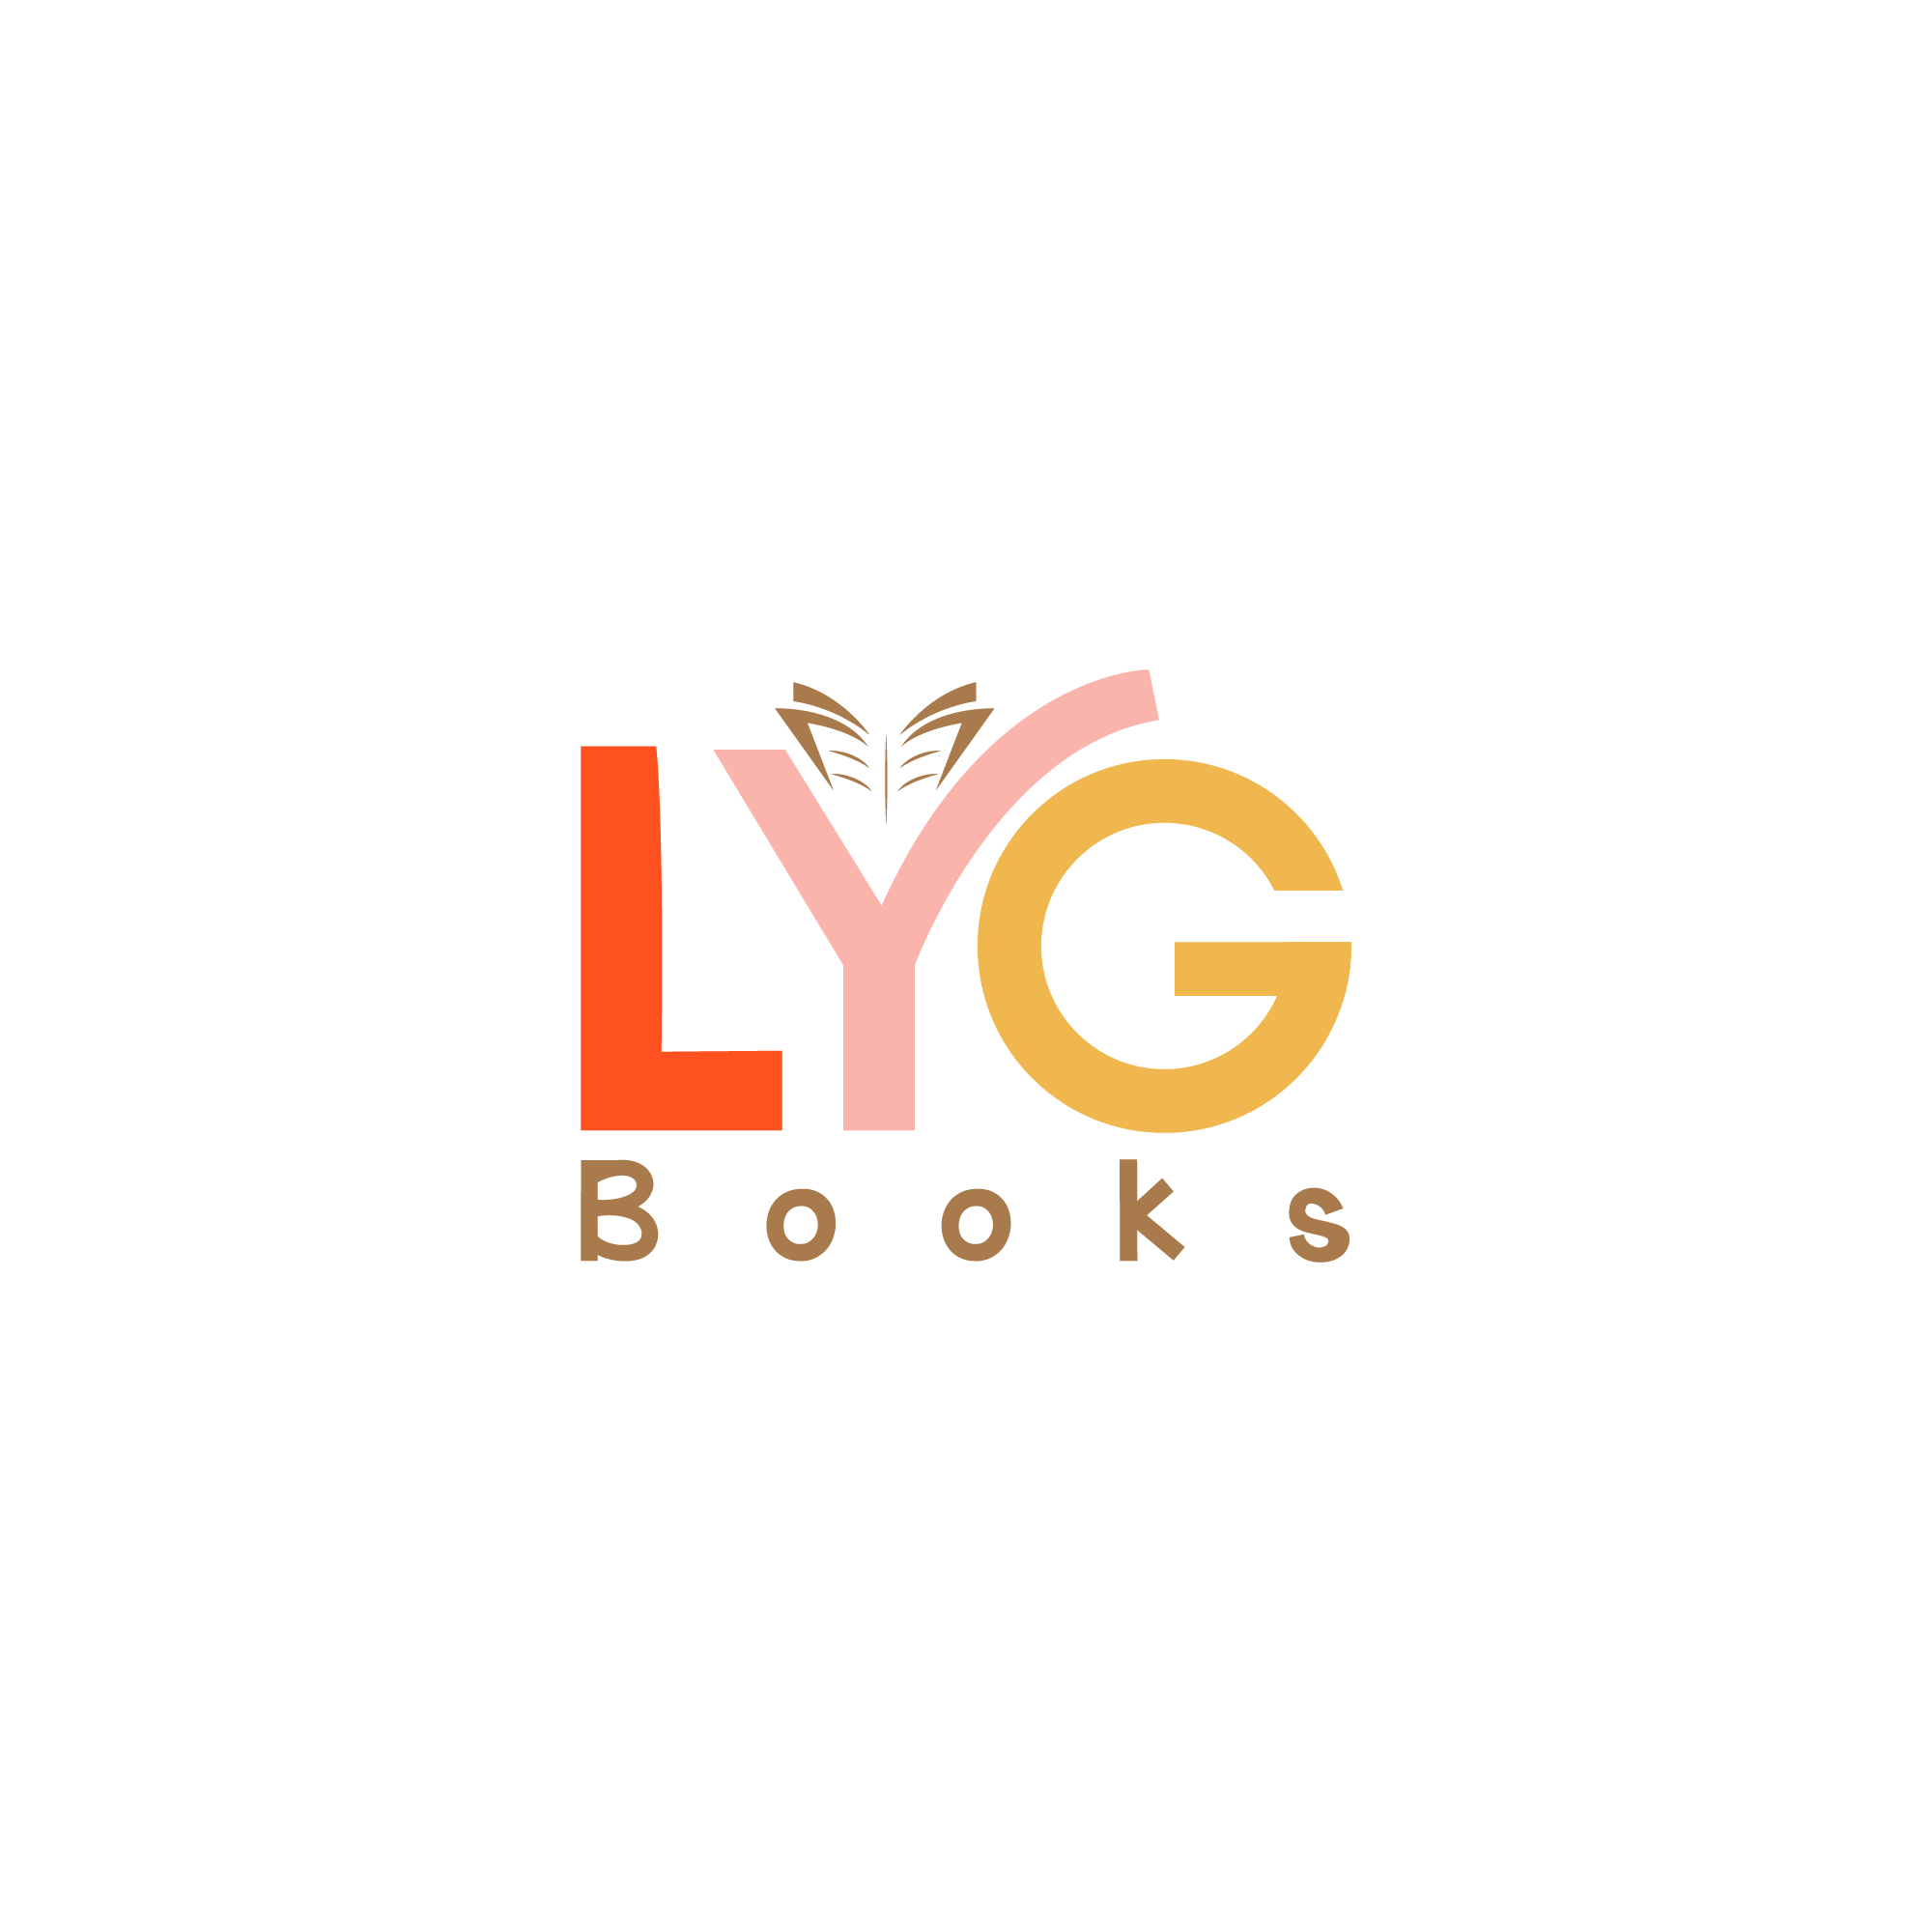 LYG Books